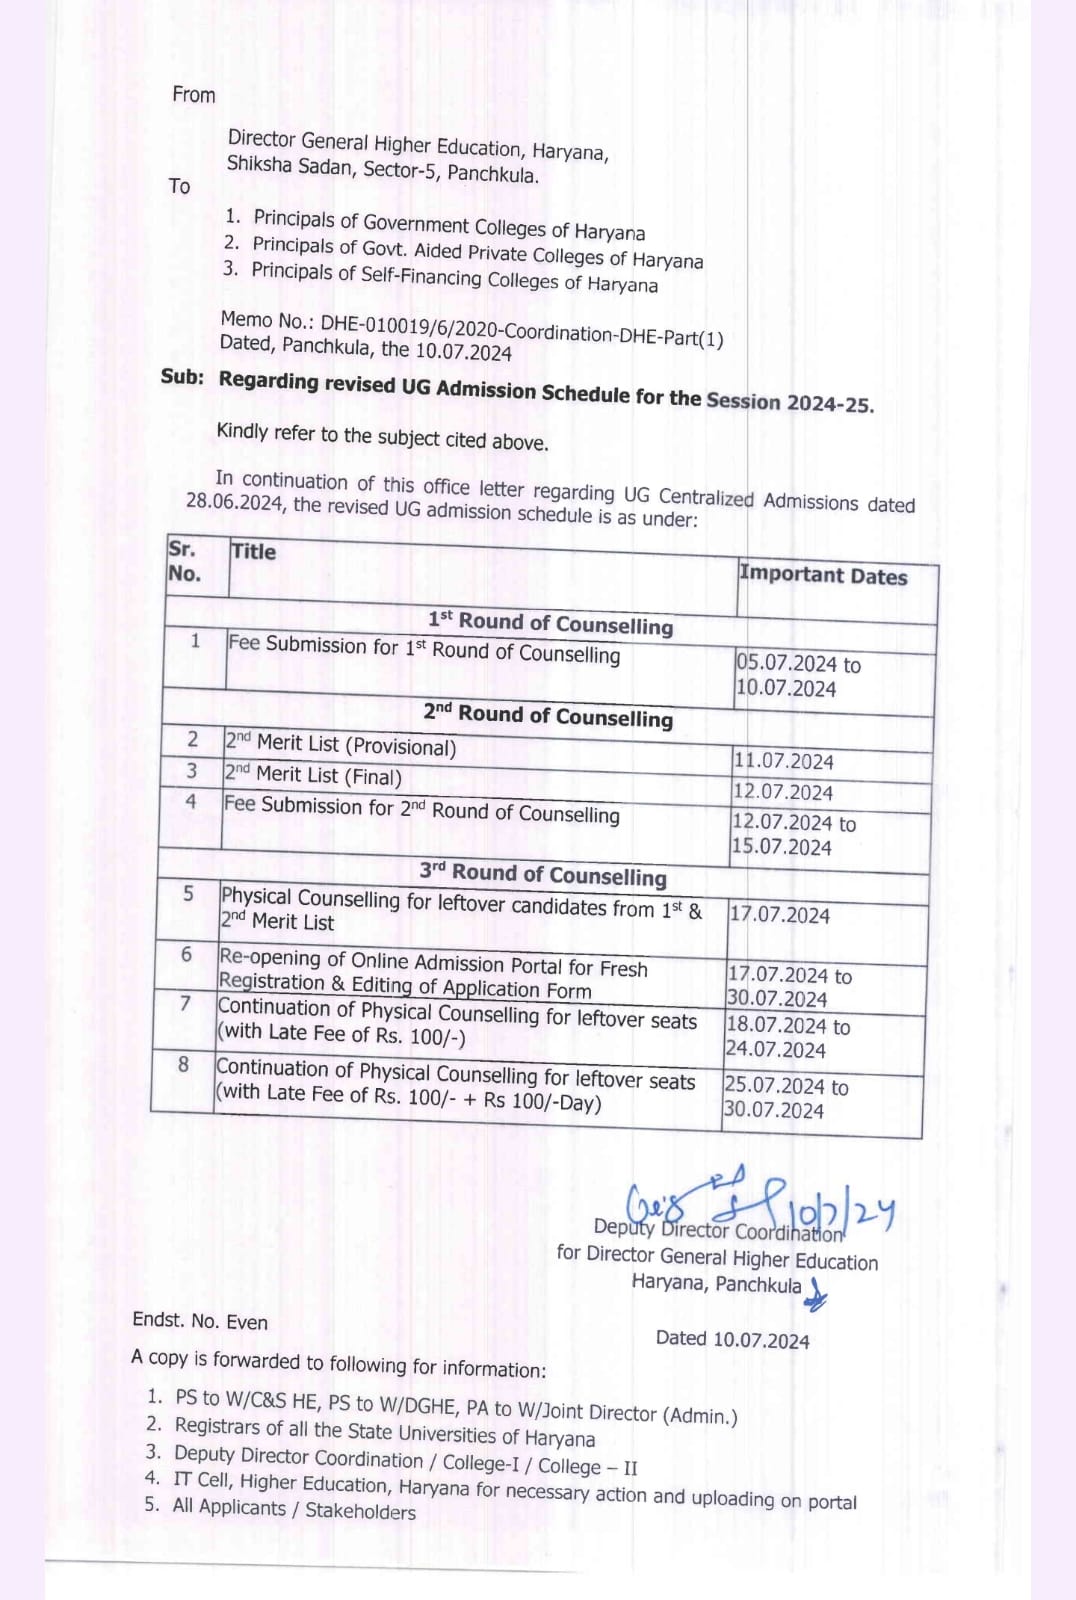 Revised admission schedule